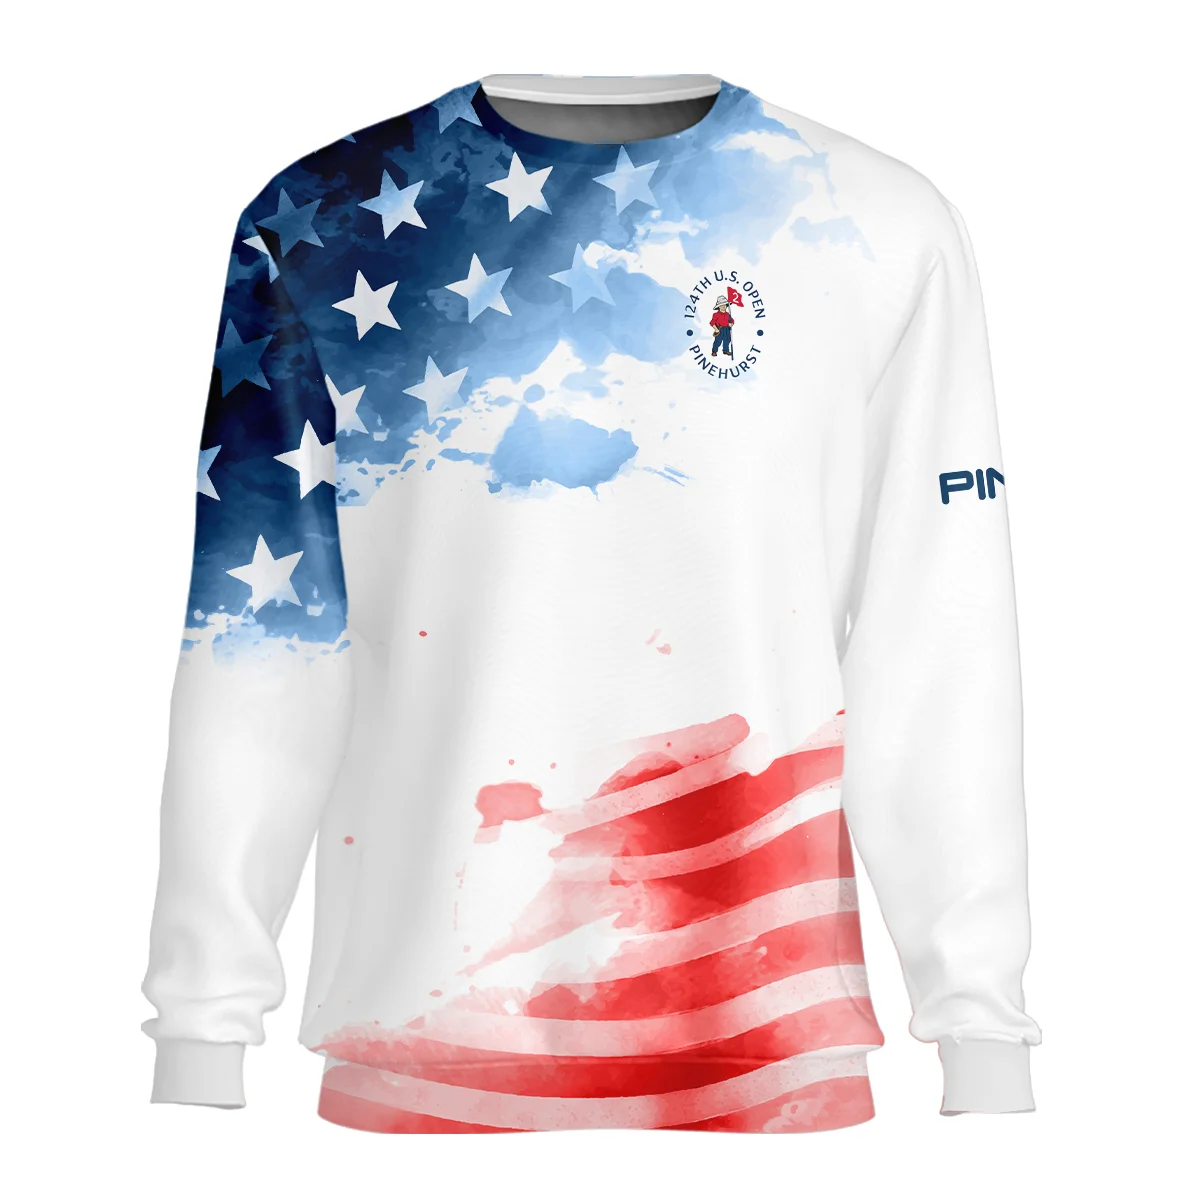 Golf 124th U.S. Open Pinehurst Ping Unisex Sweatshirt US Flag Watercolor Golf Sports All Over Print Sweatshirt